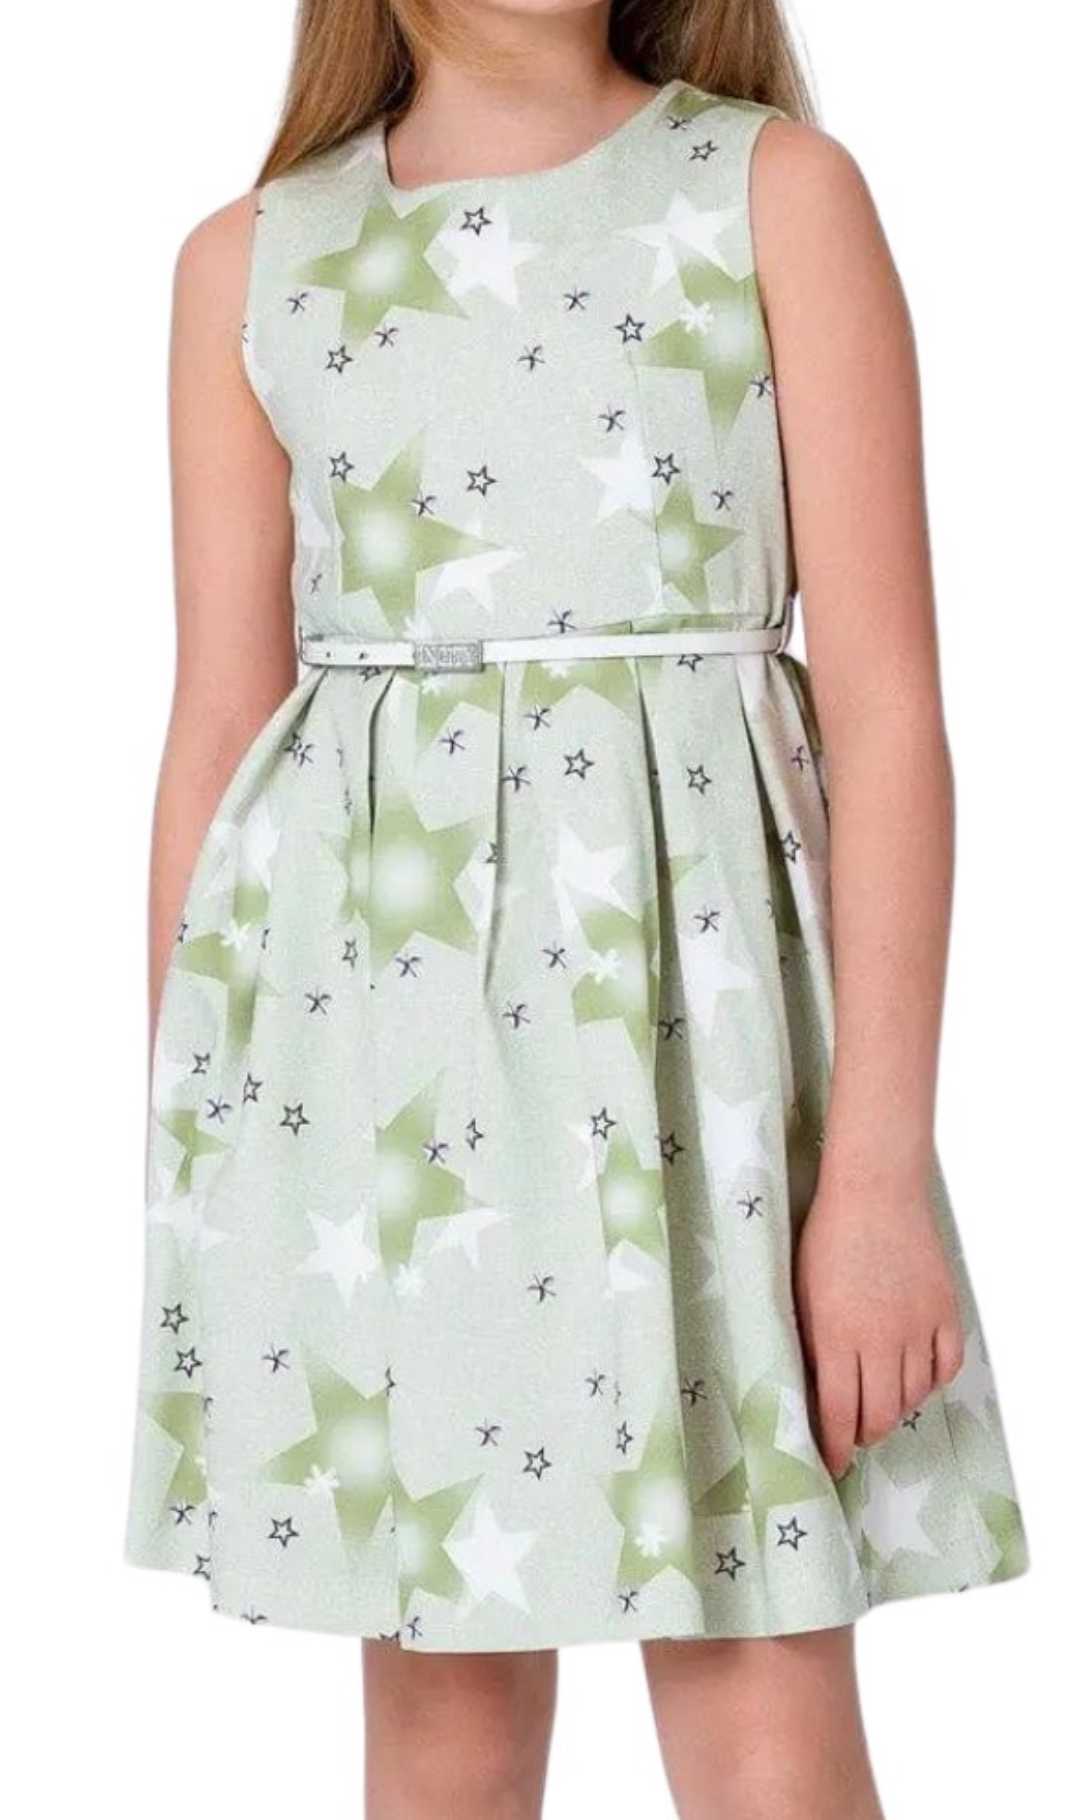 InCity Girls Toddler Tween 1-14 Years Sleeveless Printed Star Dress with Belt Detail InCity Boys & Girls